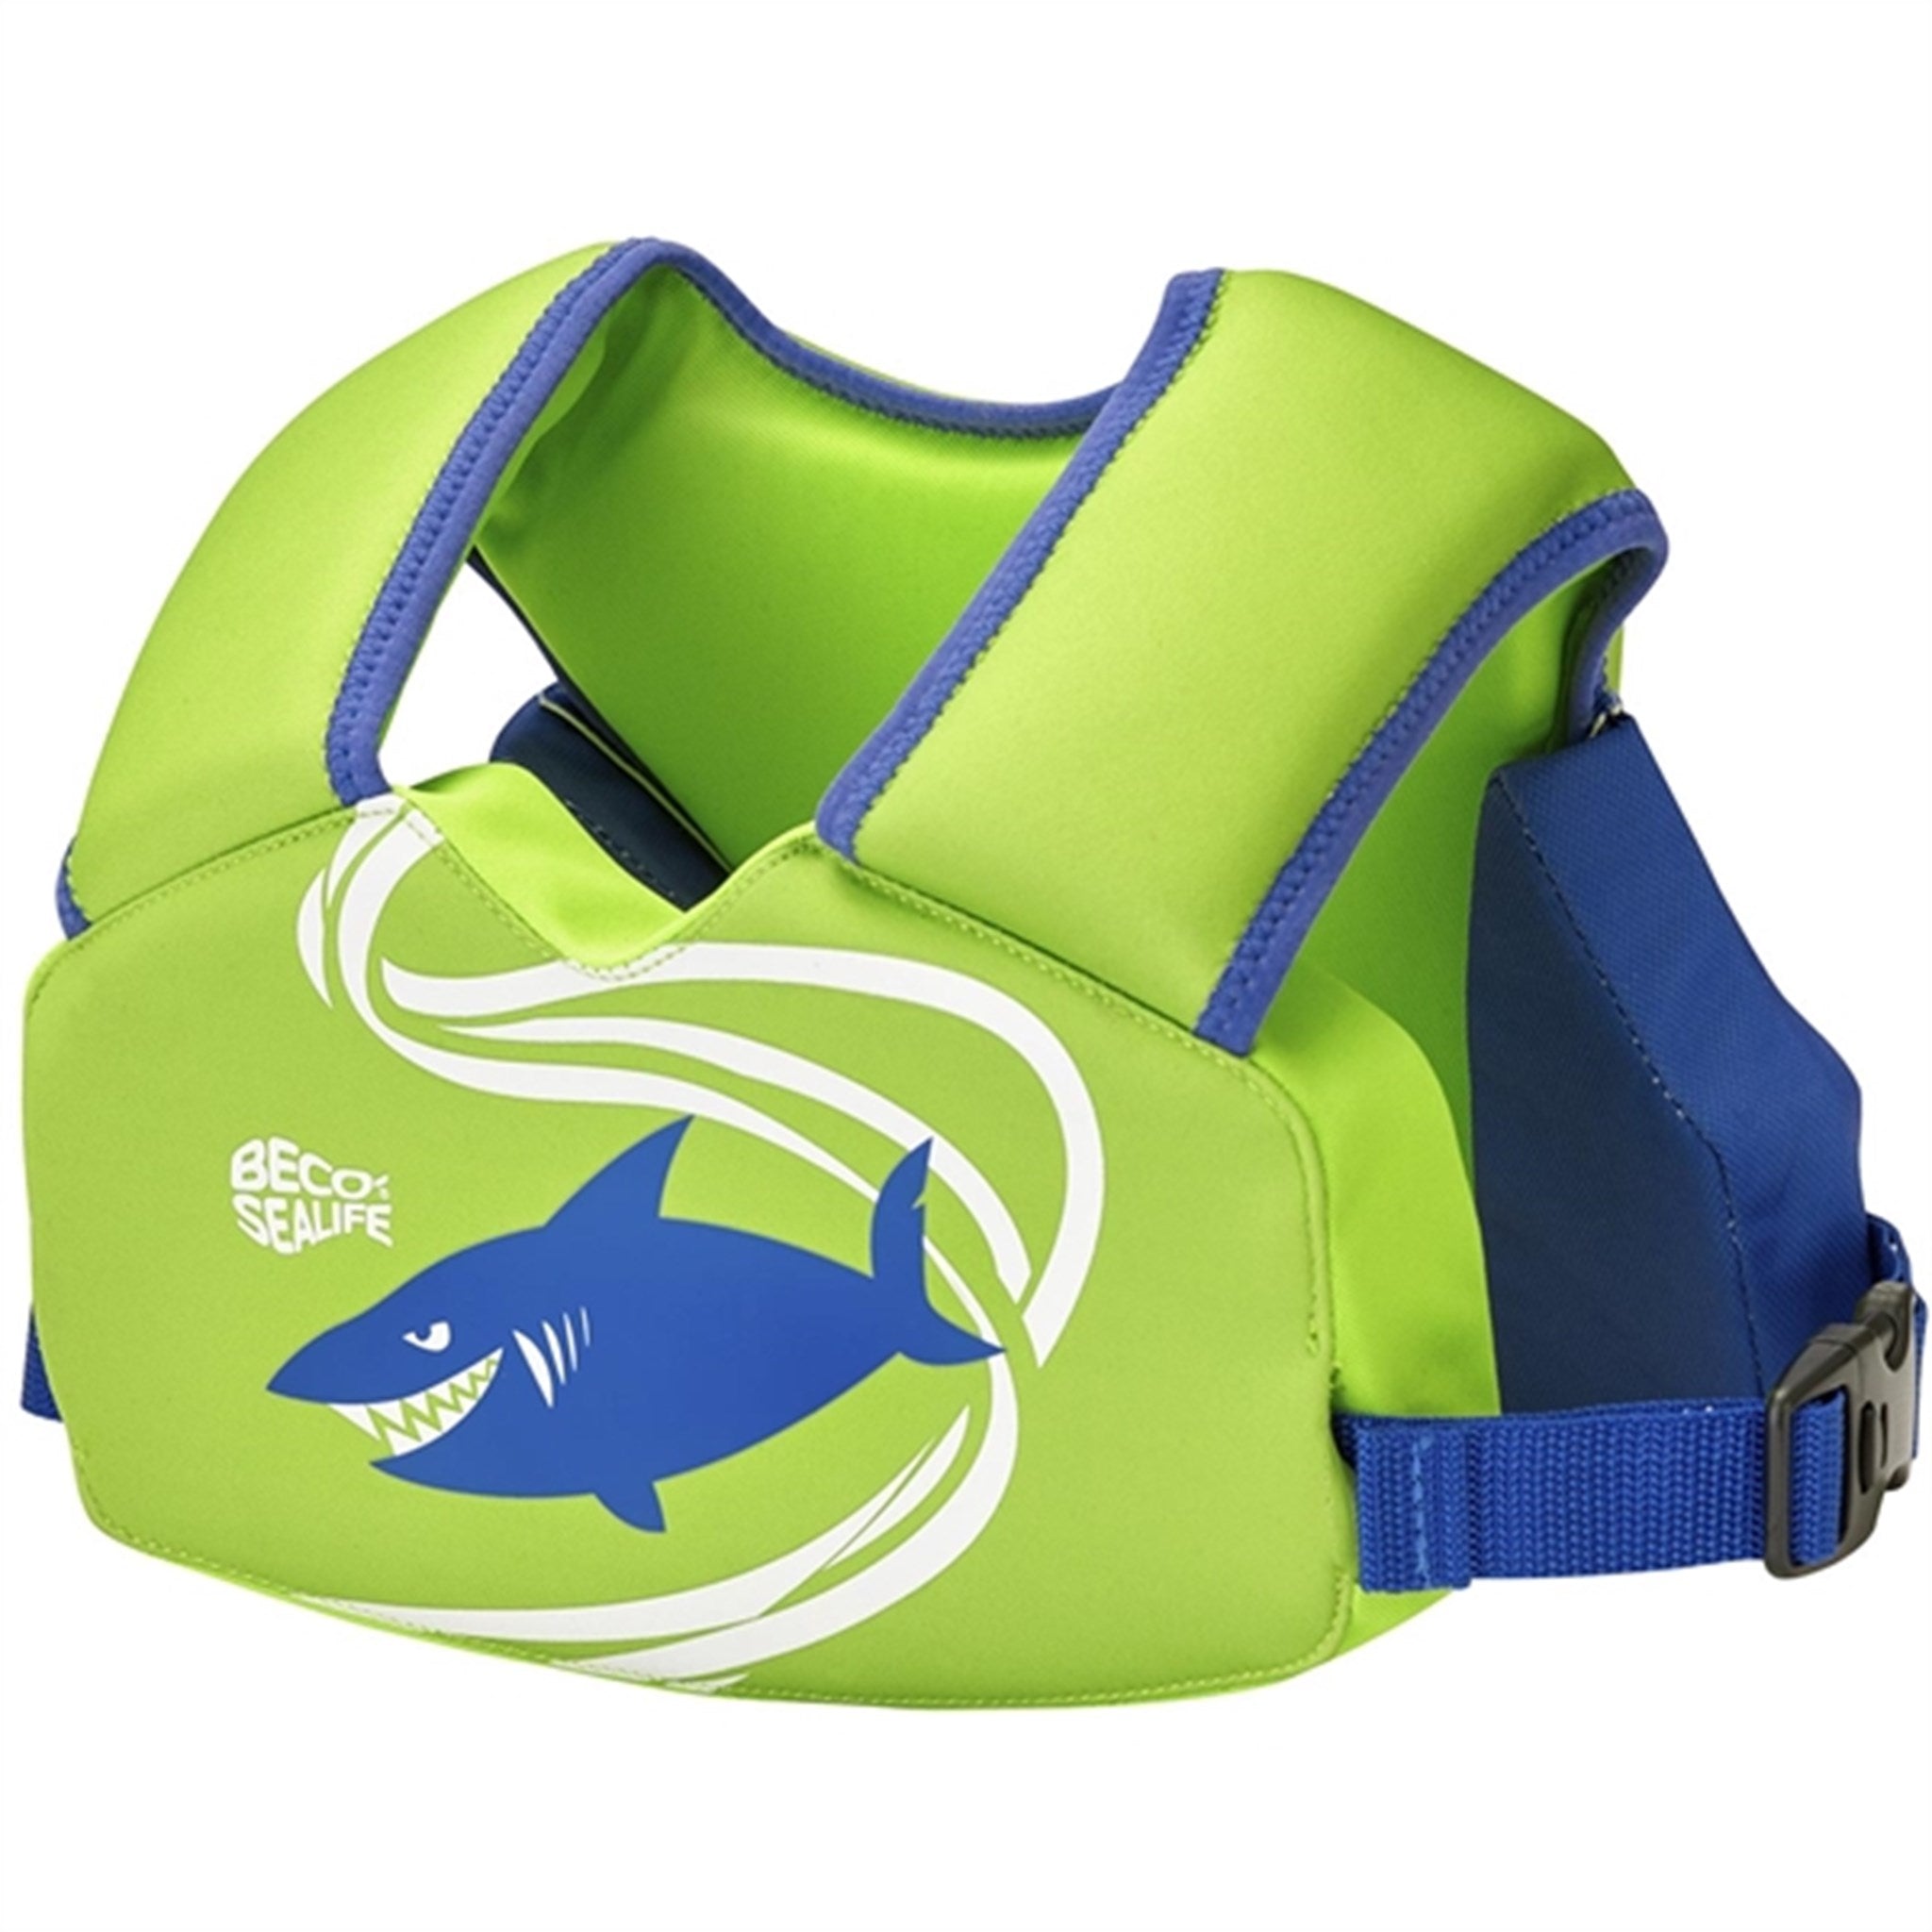 Beco Sealife Float Vest Easy-fit Green